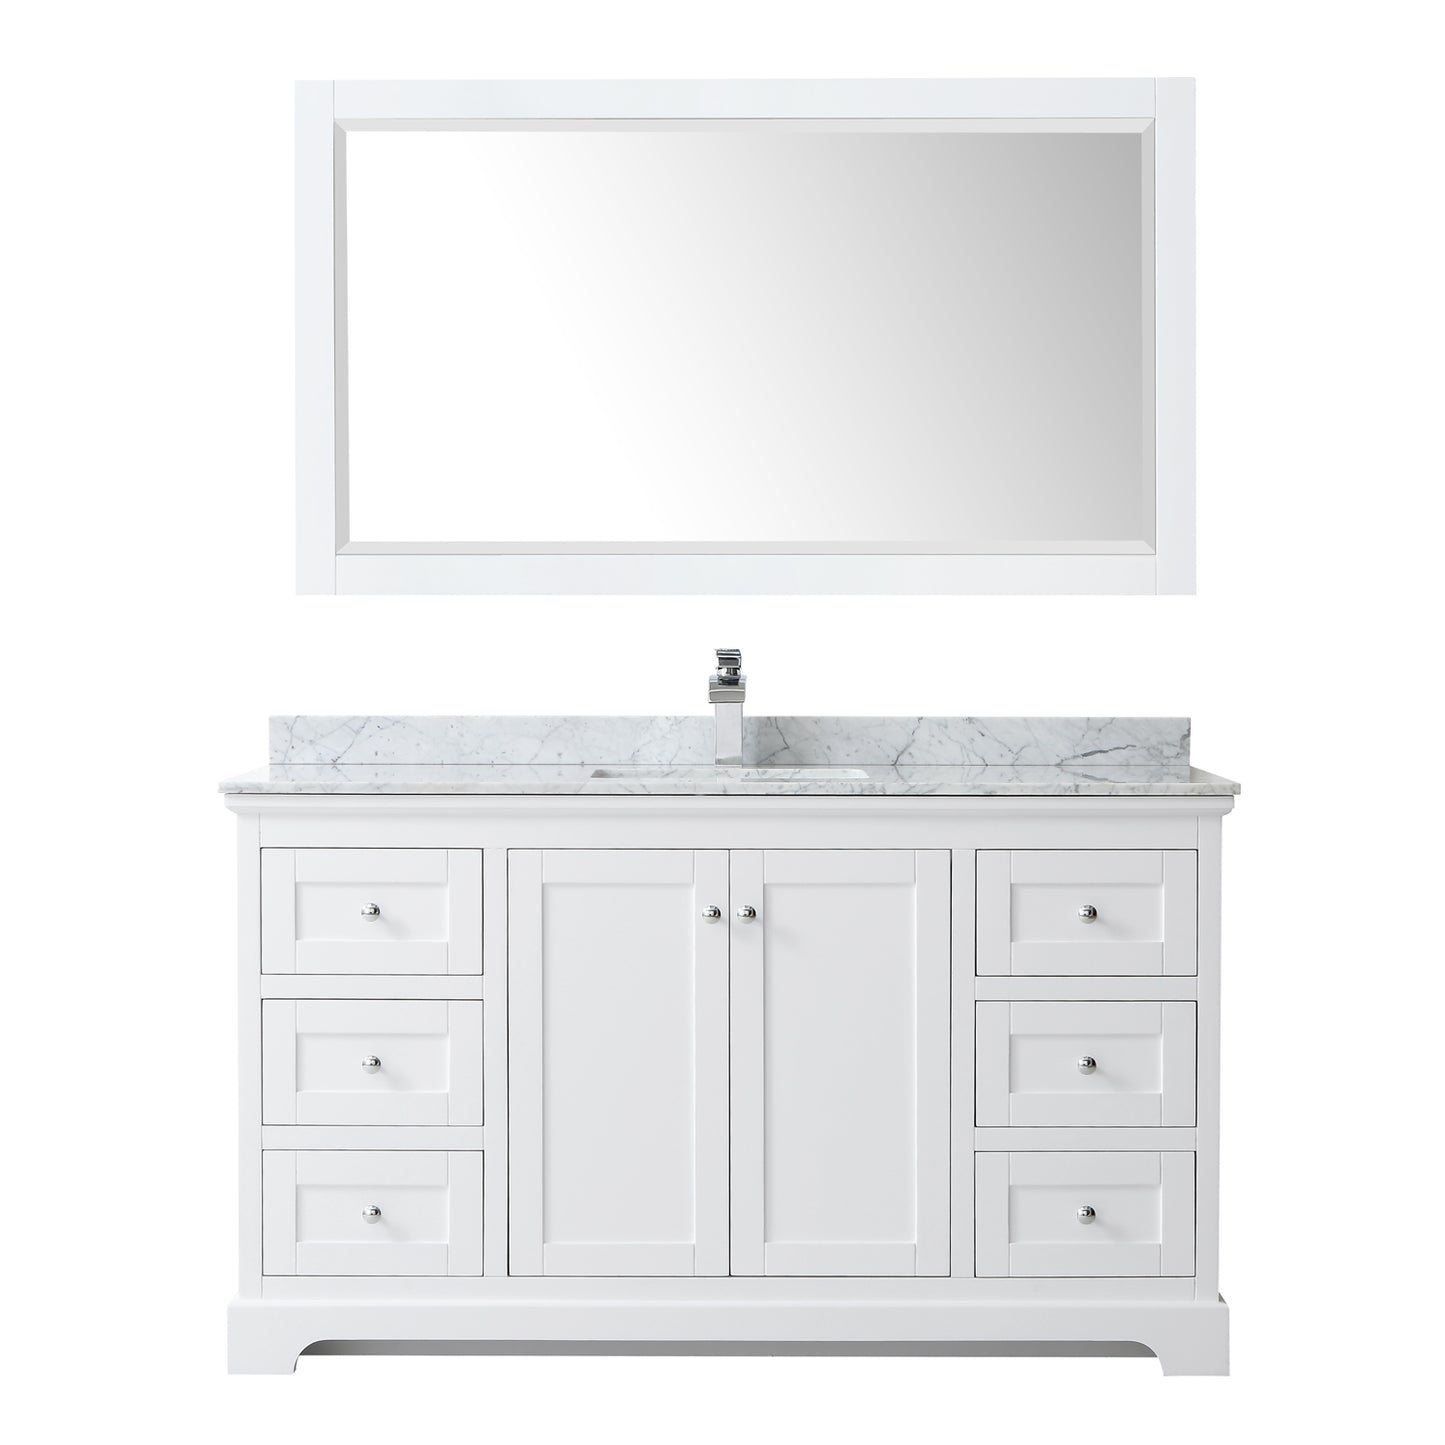 60 Inch Single Bathroom Vanity, White Carrara Marble Countertop, Undermount Square Sink, and 58 Inch Mirror - Luxe Bathroom Vanities Luxury Bathroom Fixtures Bathroom Furniture